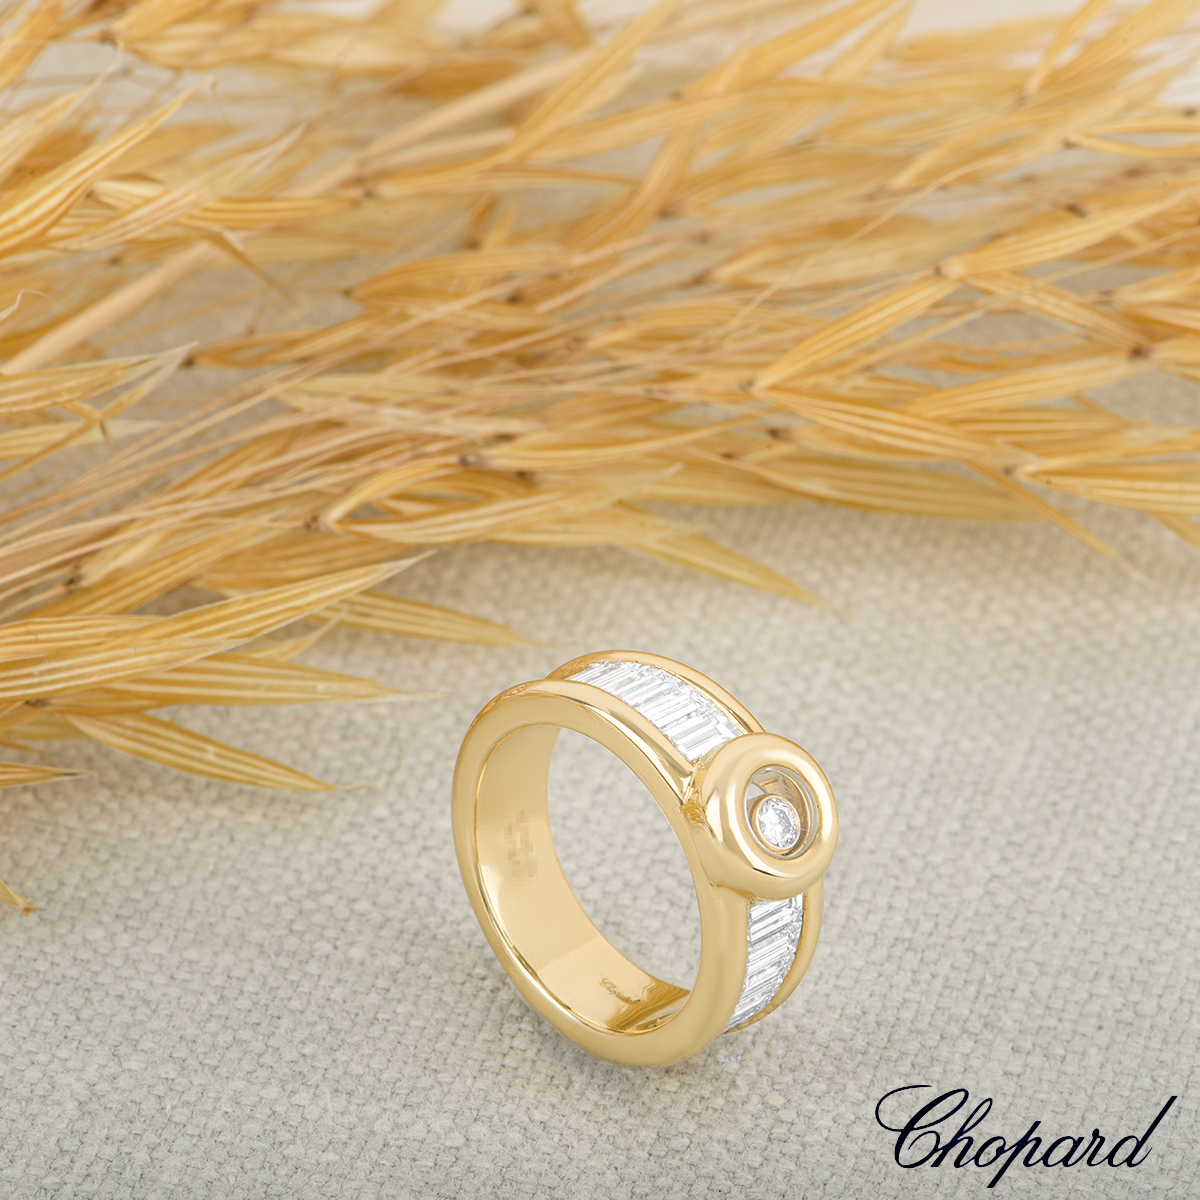 Chopard Yellow Gold Happy Diamonds Ring 82/2211-0107